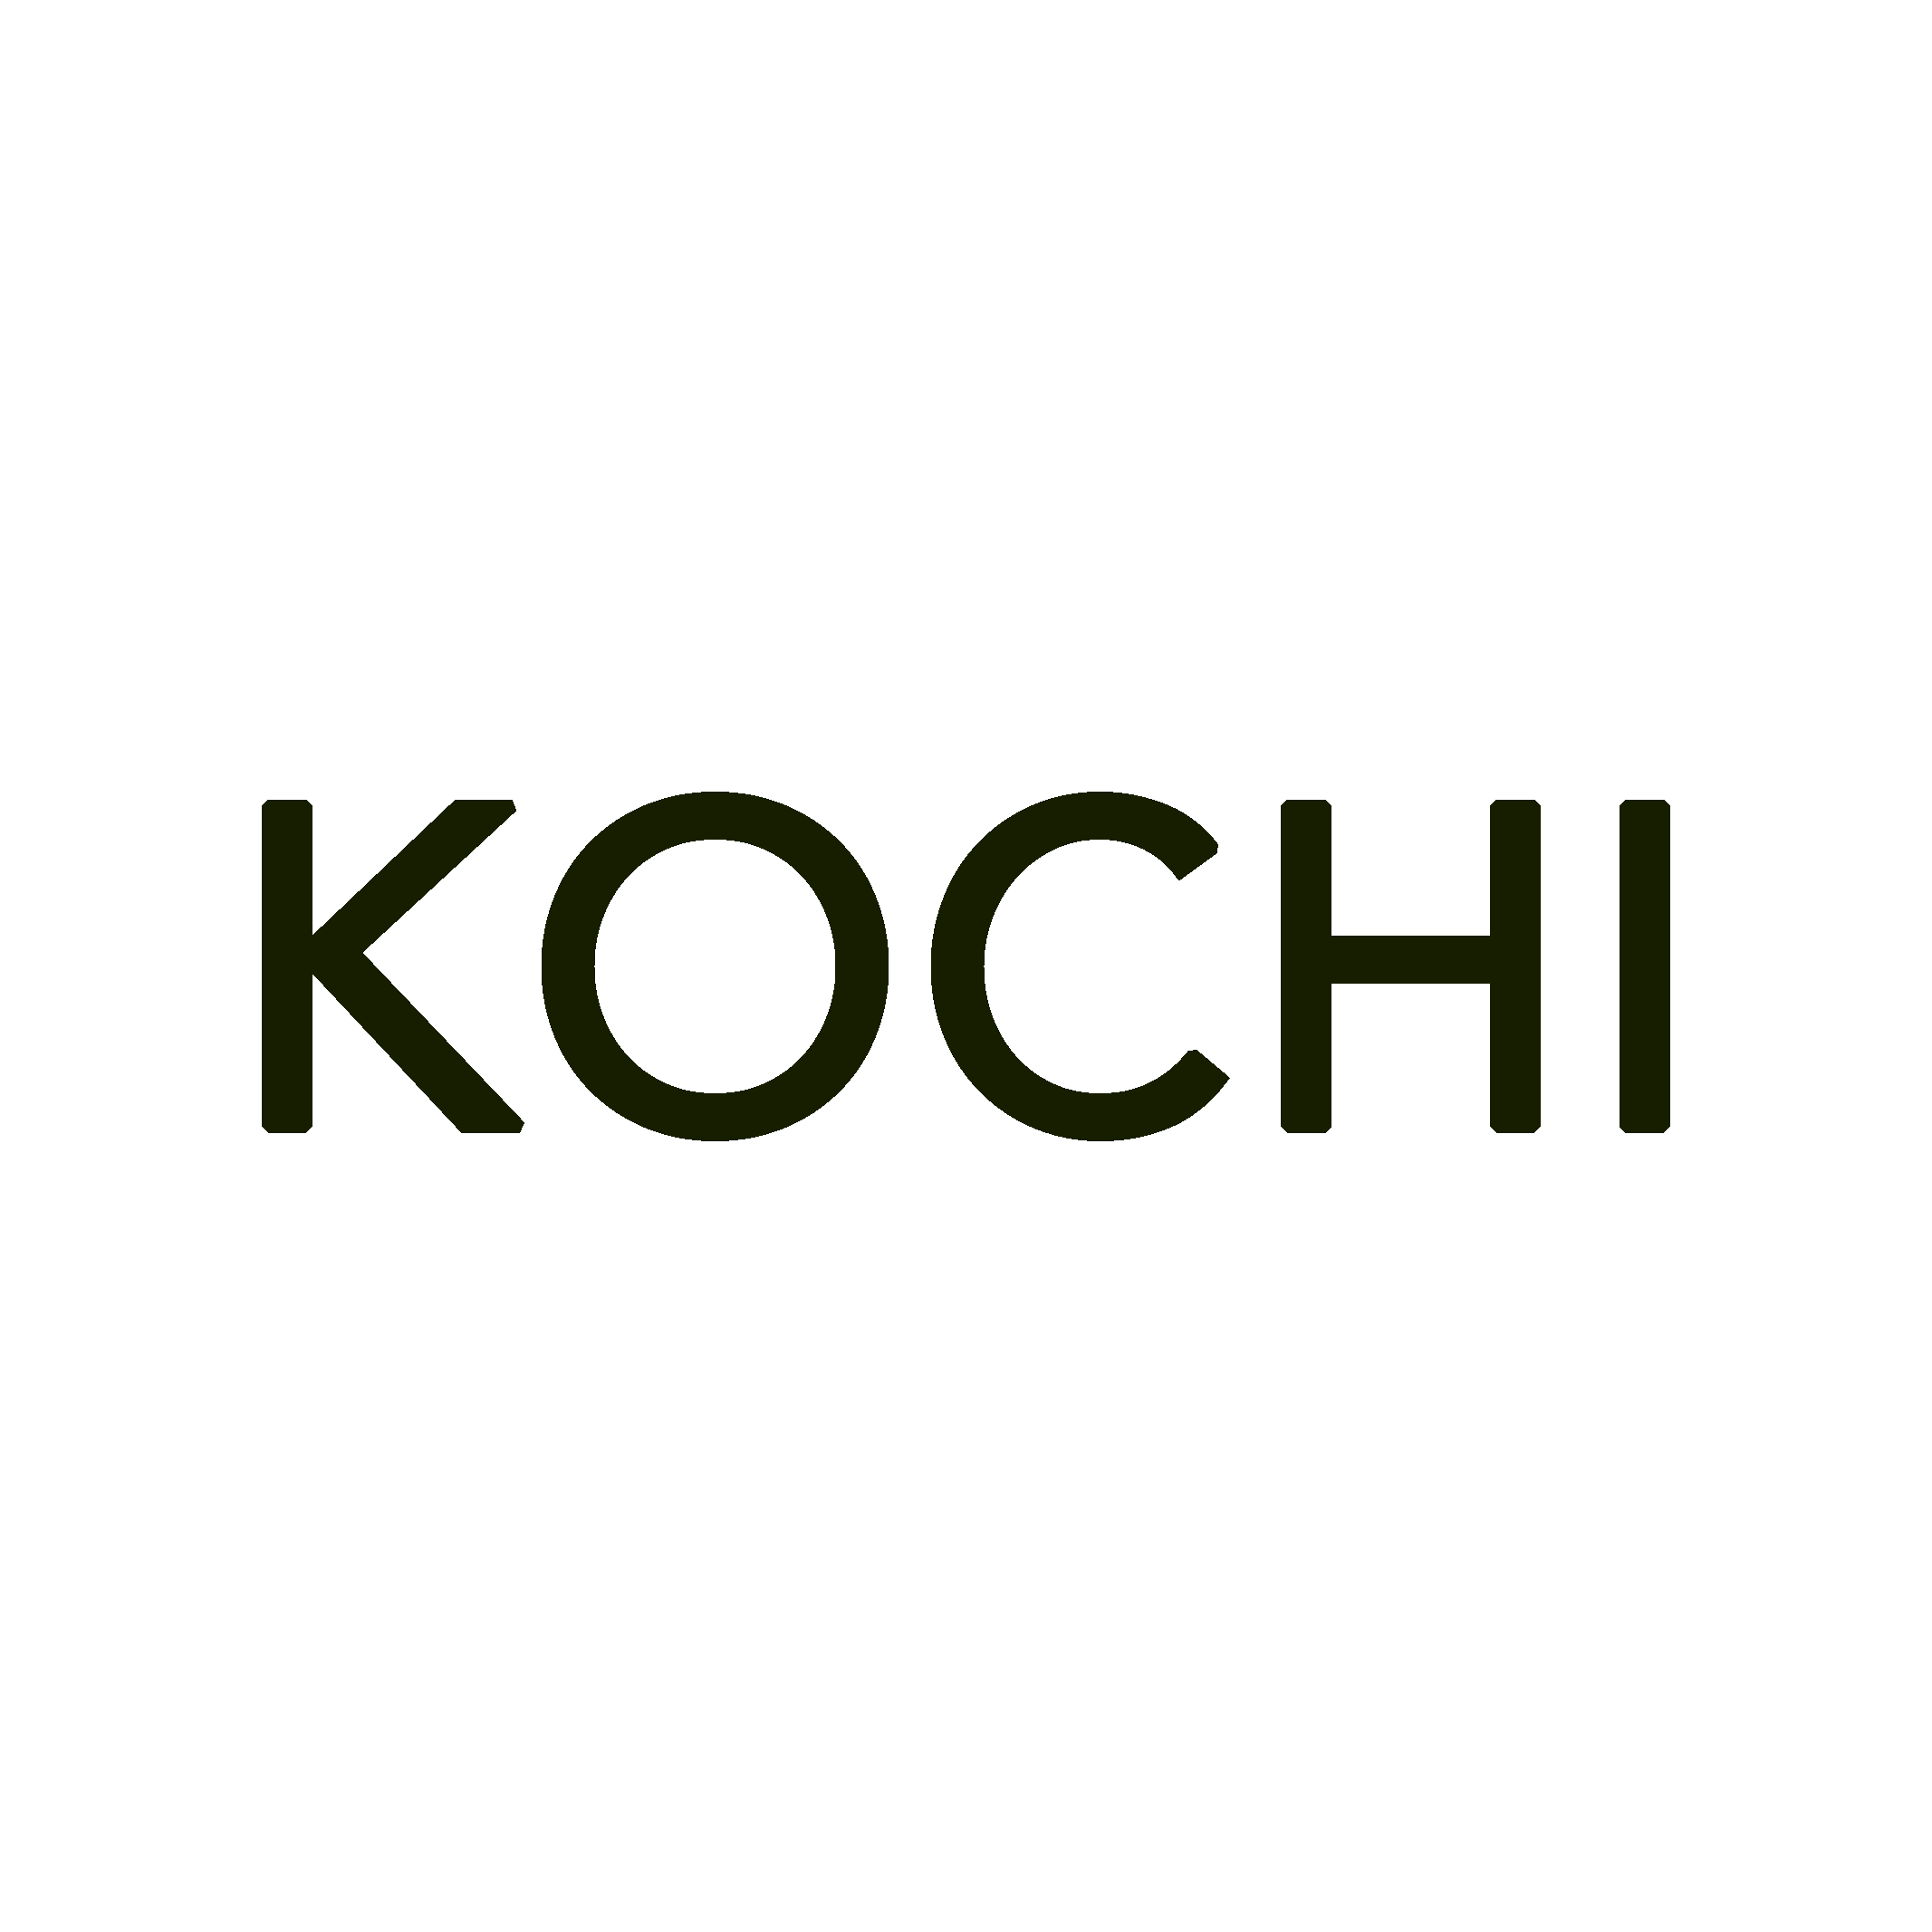 KOCHI profile on Qualified.One